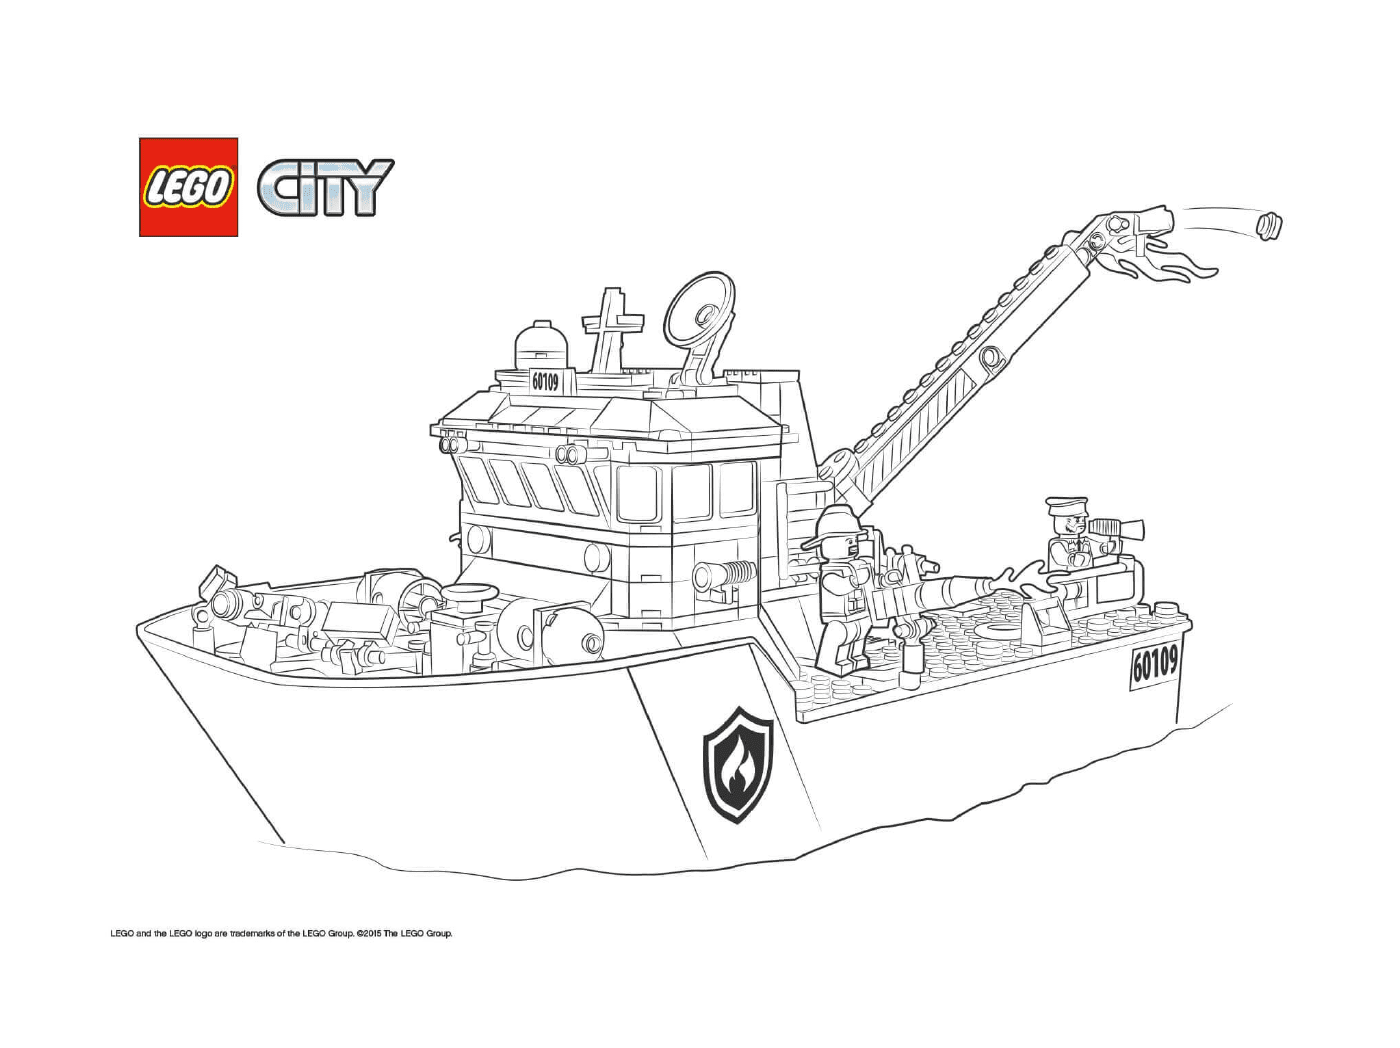  Lego City Firefighter's Boat 